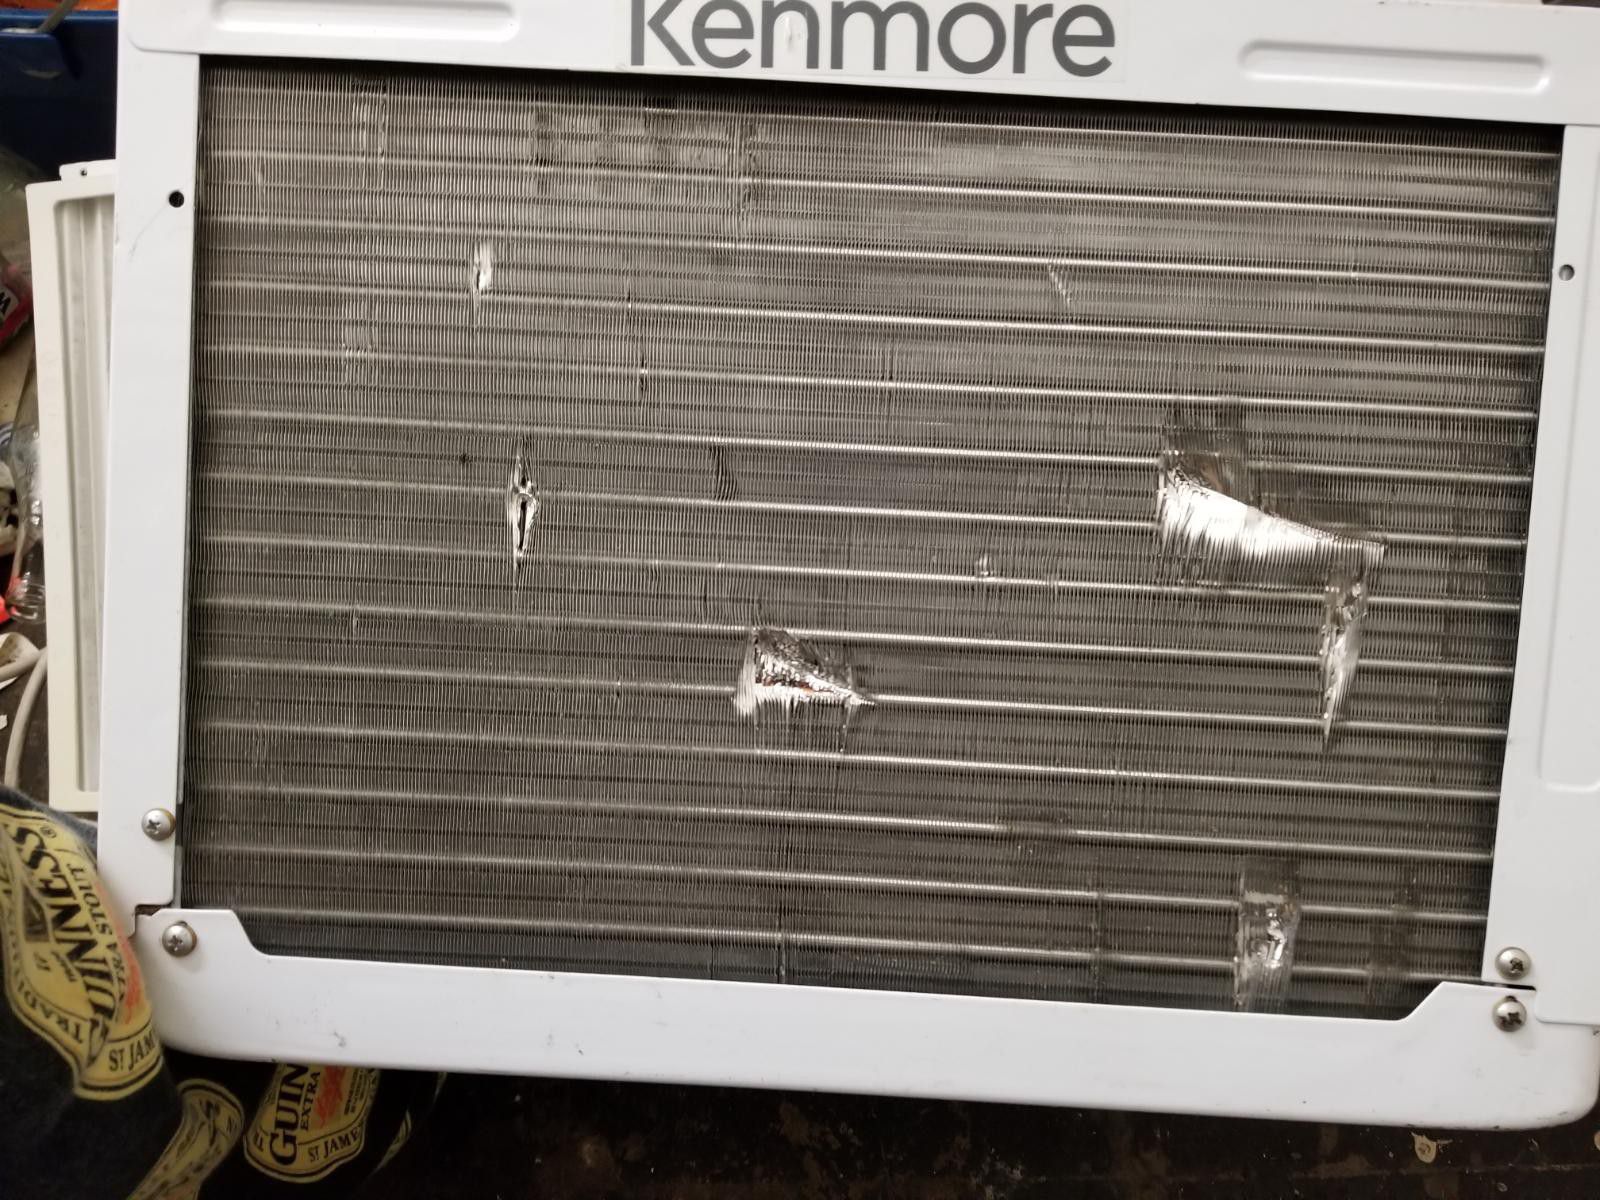 Kenmore ac window unit